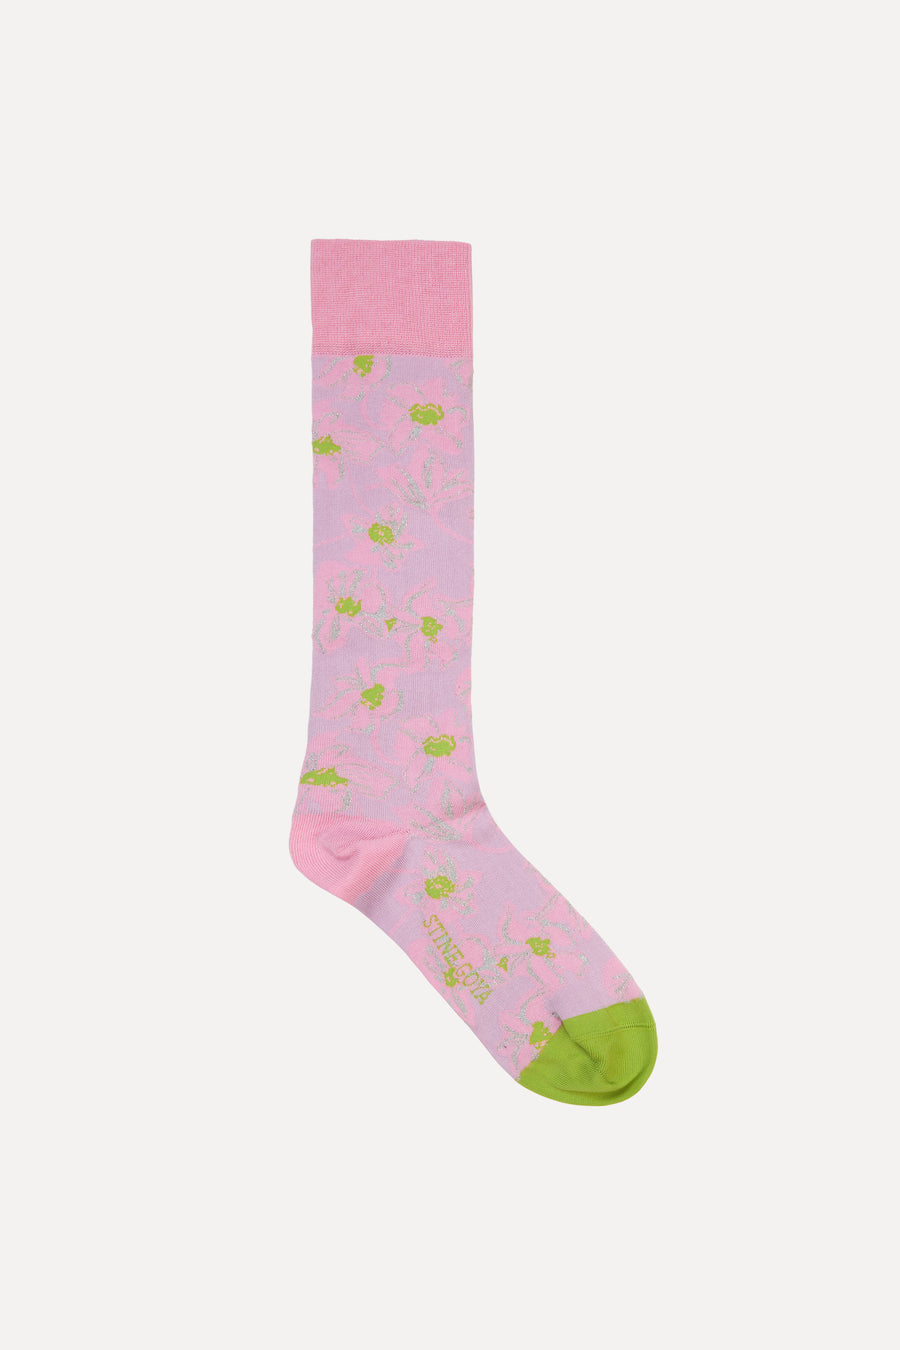 Stine Goya - Lulu Long Socks